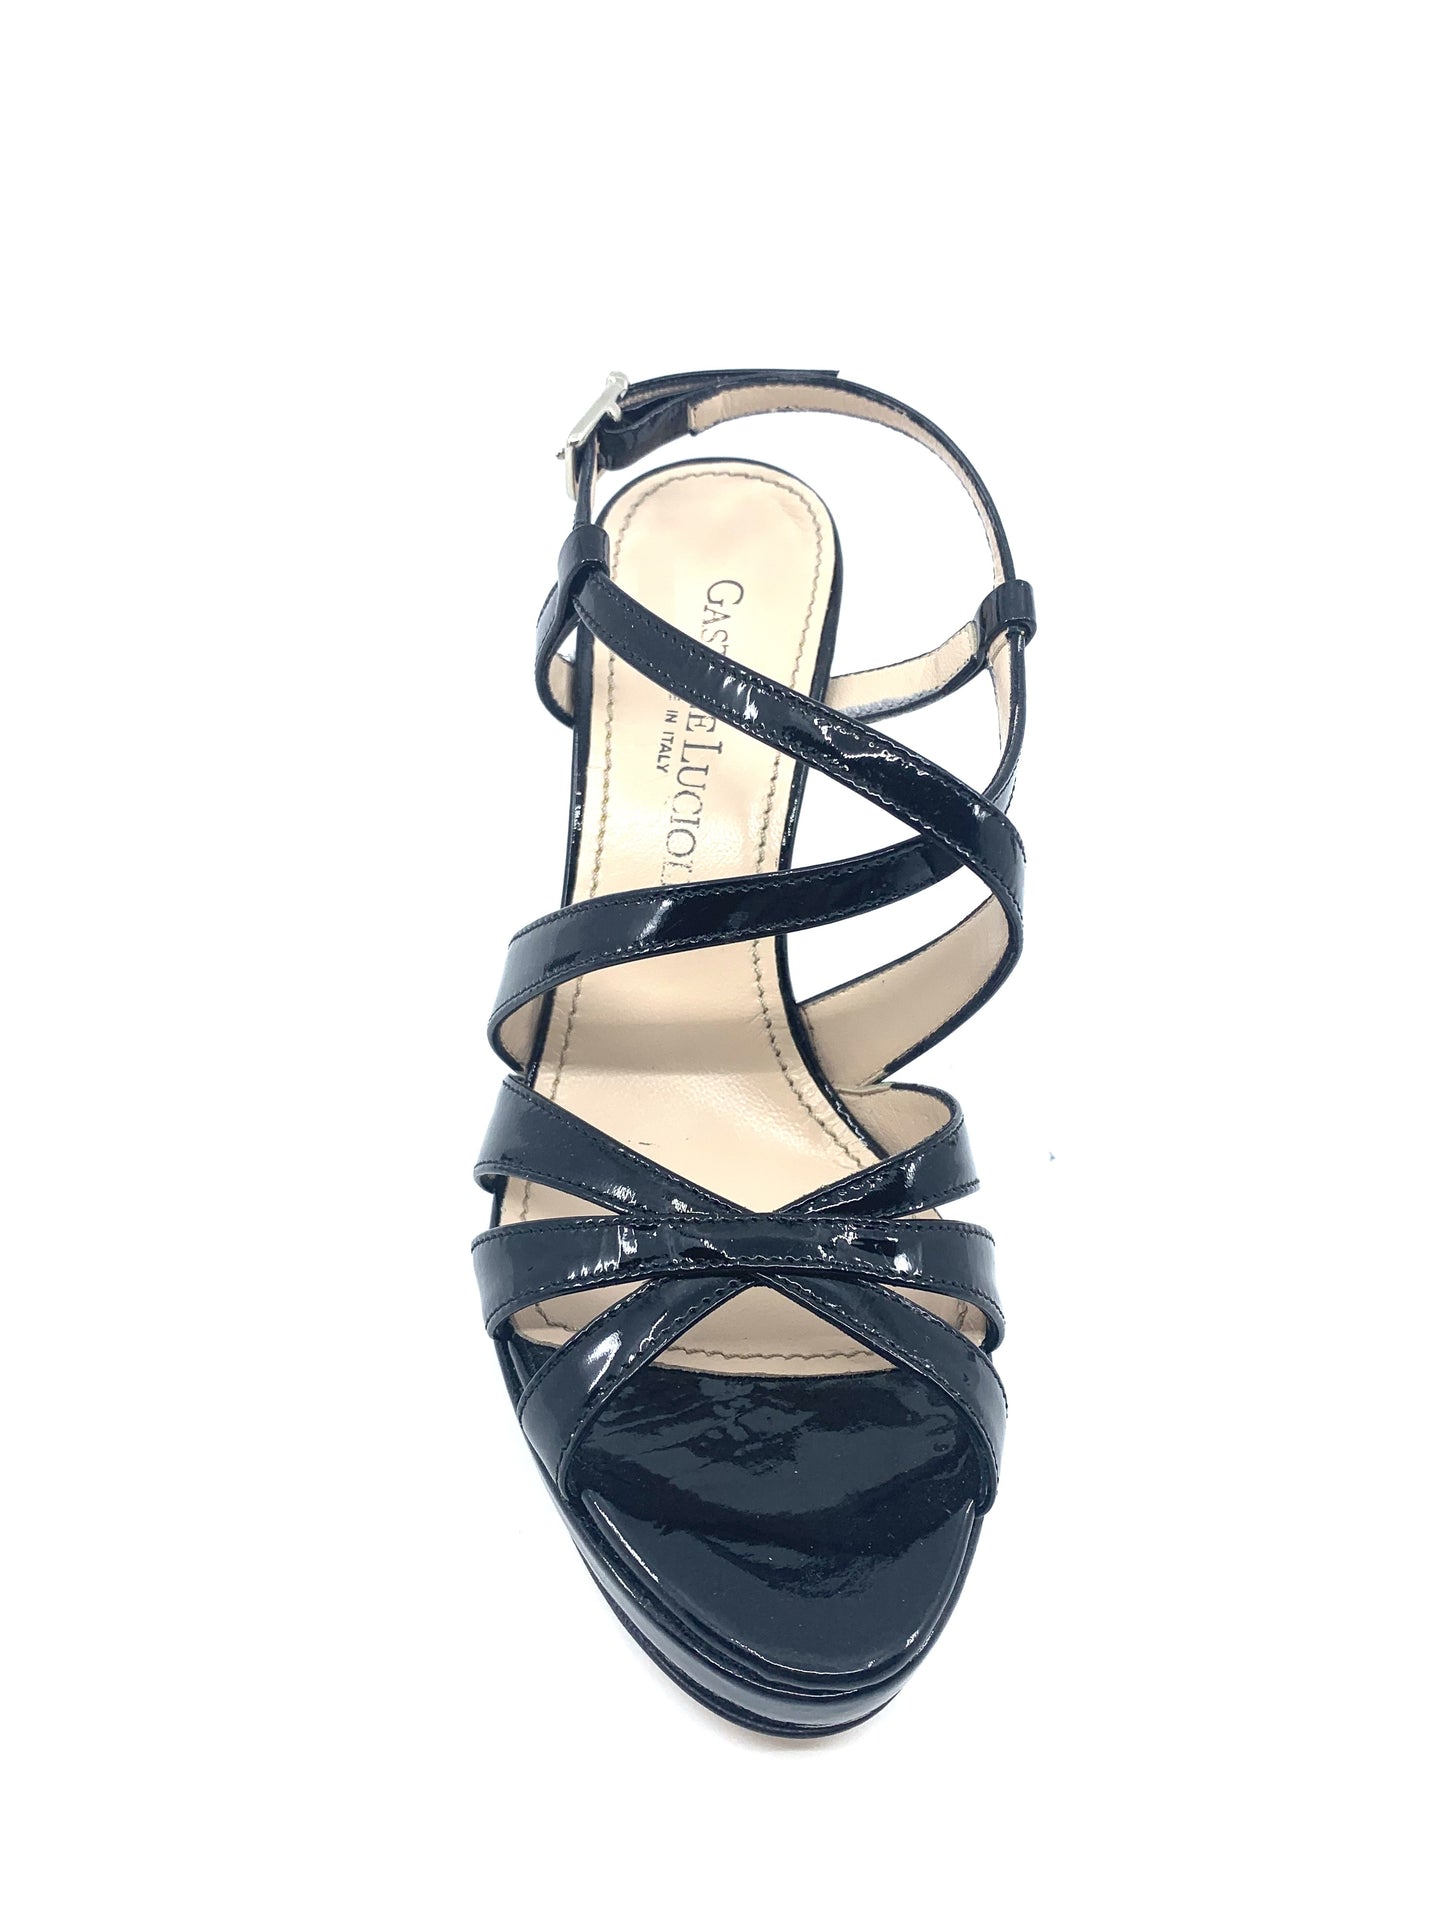 4043 Vernice Nero Gastone Lucioli Slingback Patent Sandals